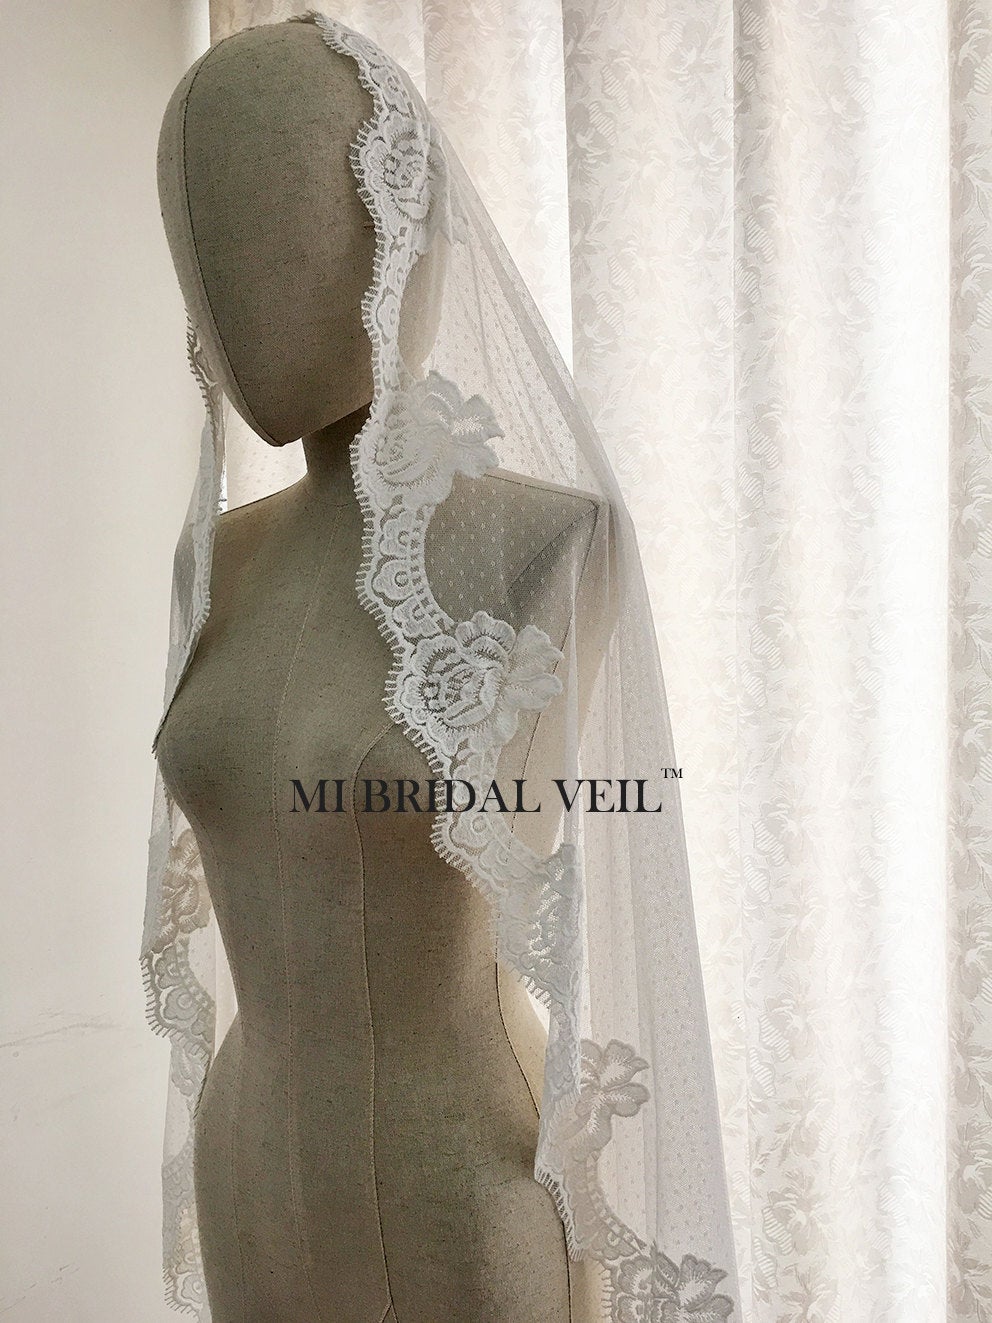 Polka Dot Veil, Mantilla Lace Wedding Veil. Vintage Inspired Rose Lace Waltz Bridal Veil. Mi Bridal